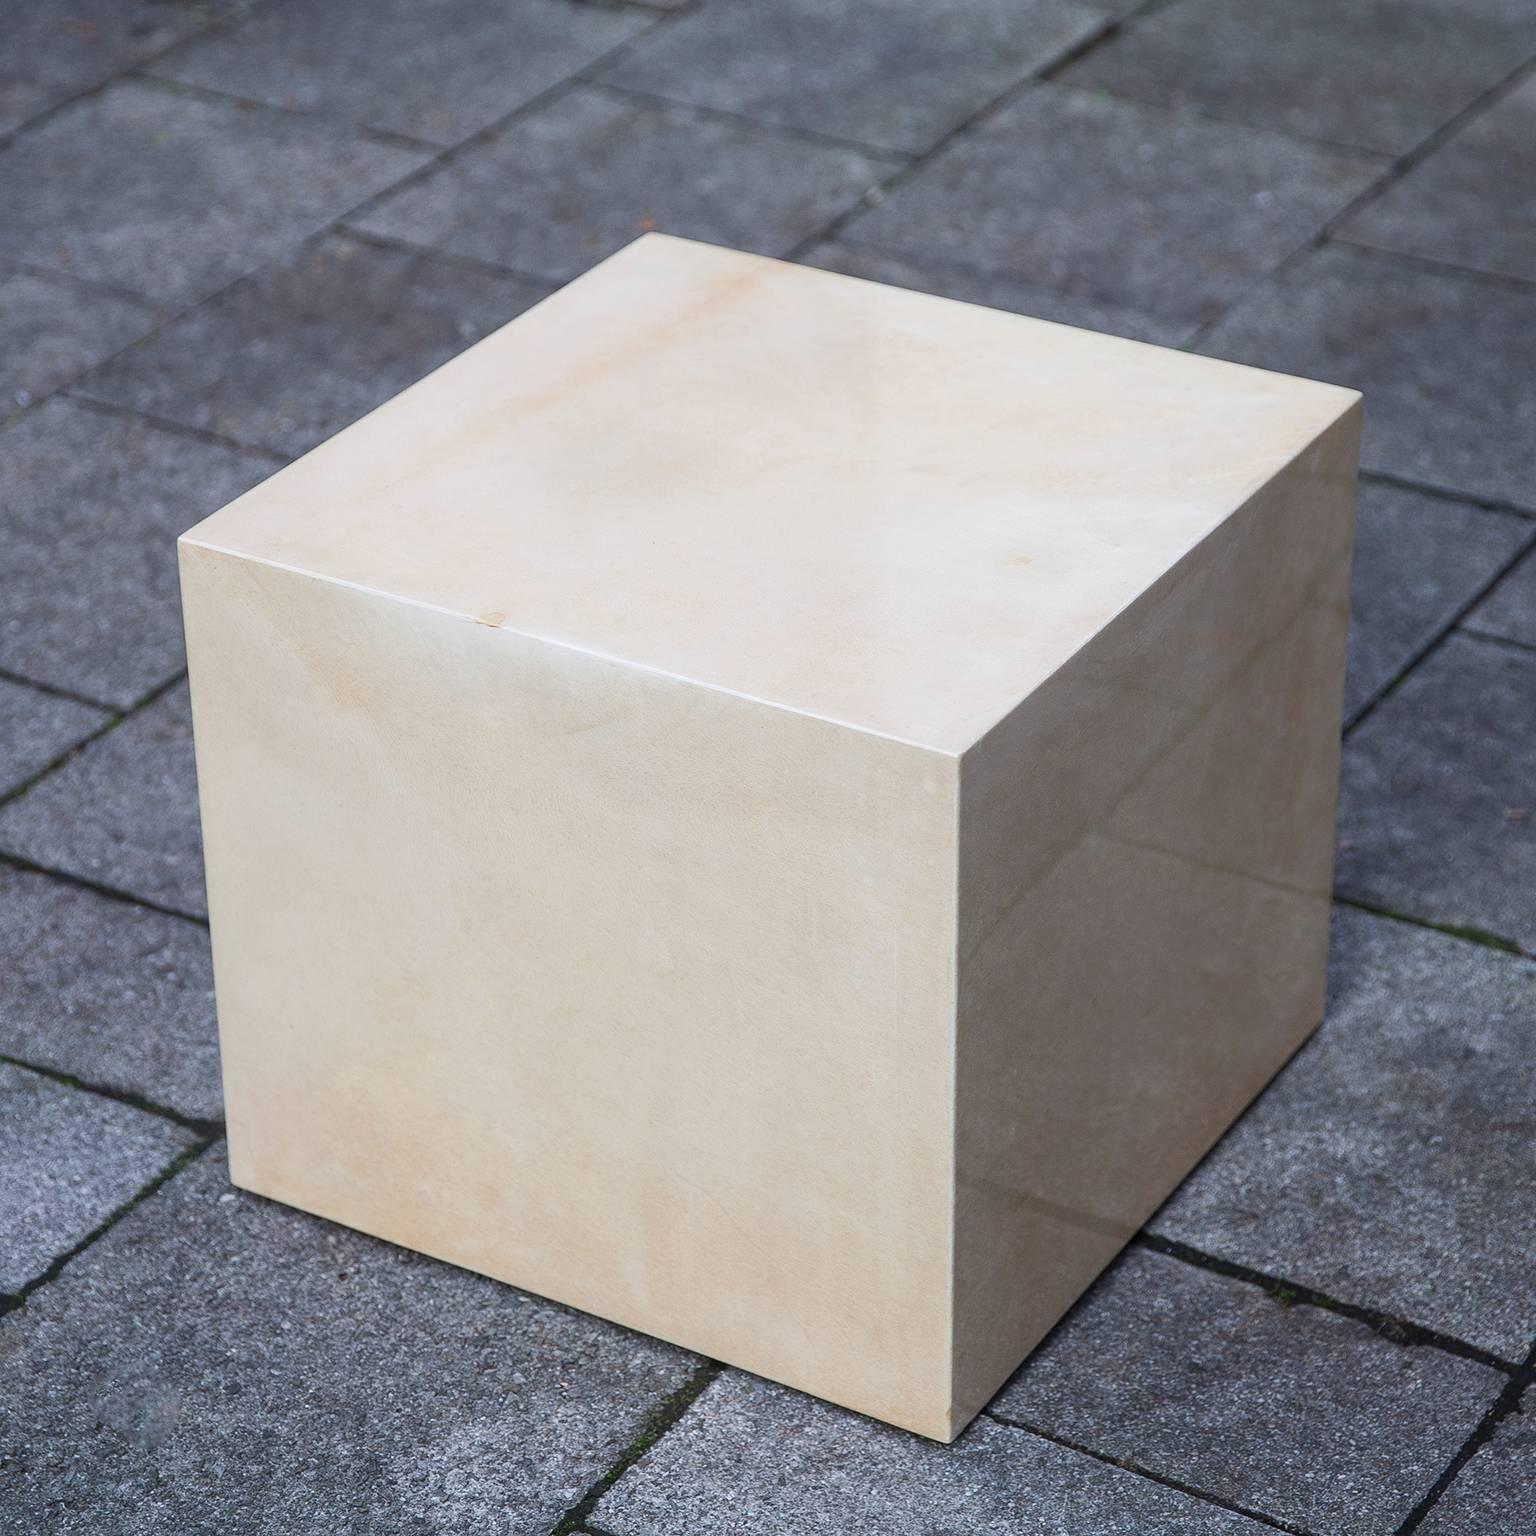 Fantastic Aldo Tura light cream goatskin cube side table in perfect condition.

Measures: 45 x 45 x 40.5cm.